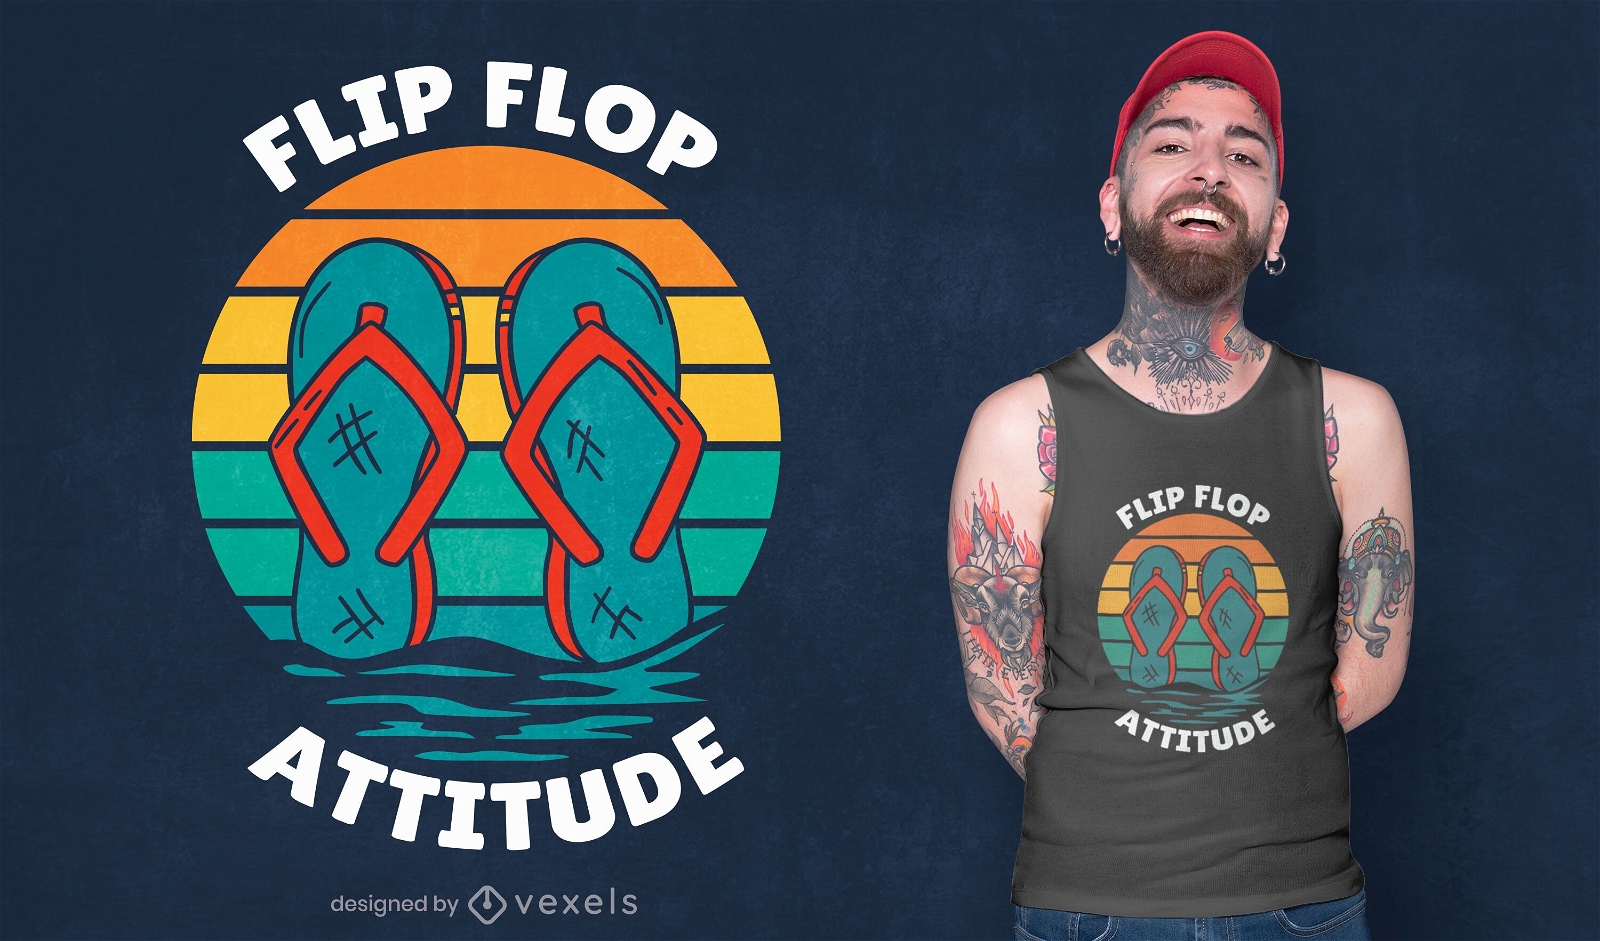 Flip flop attitude t-shirt design 